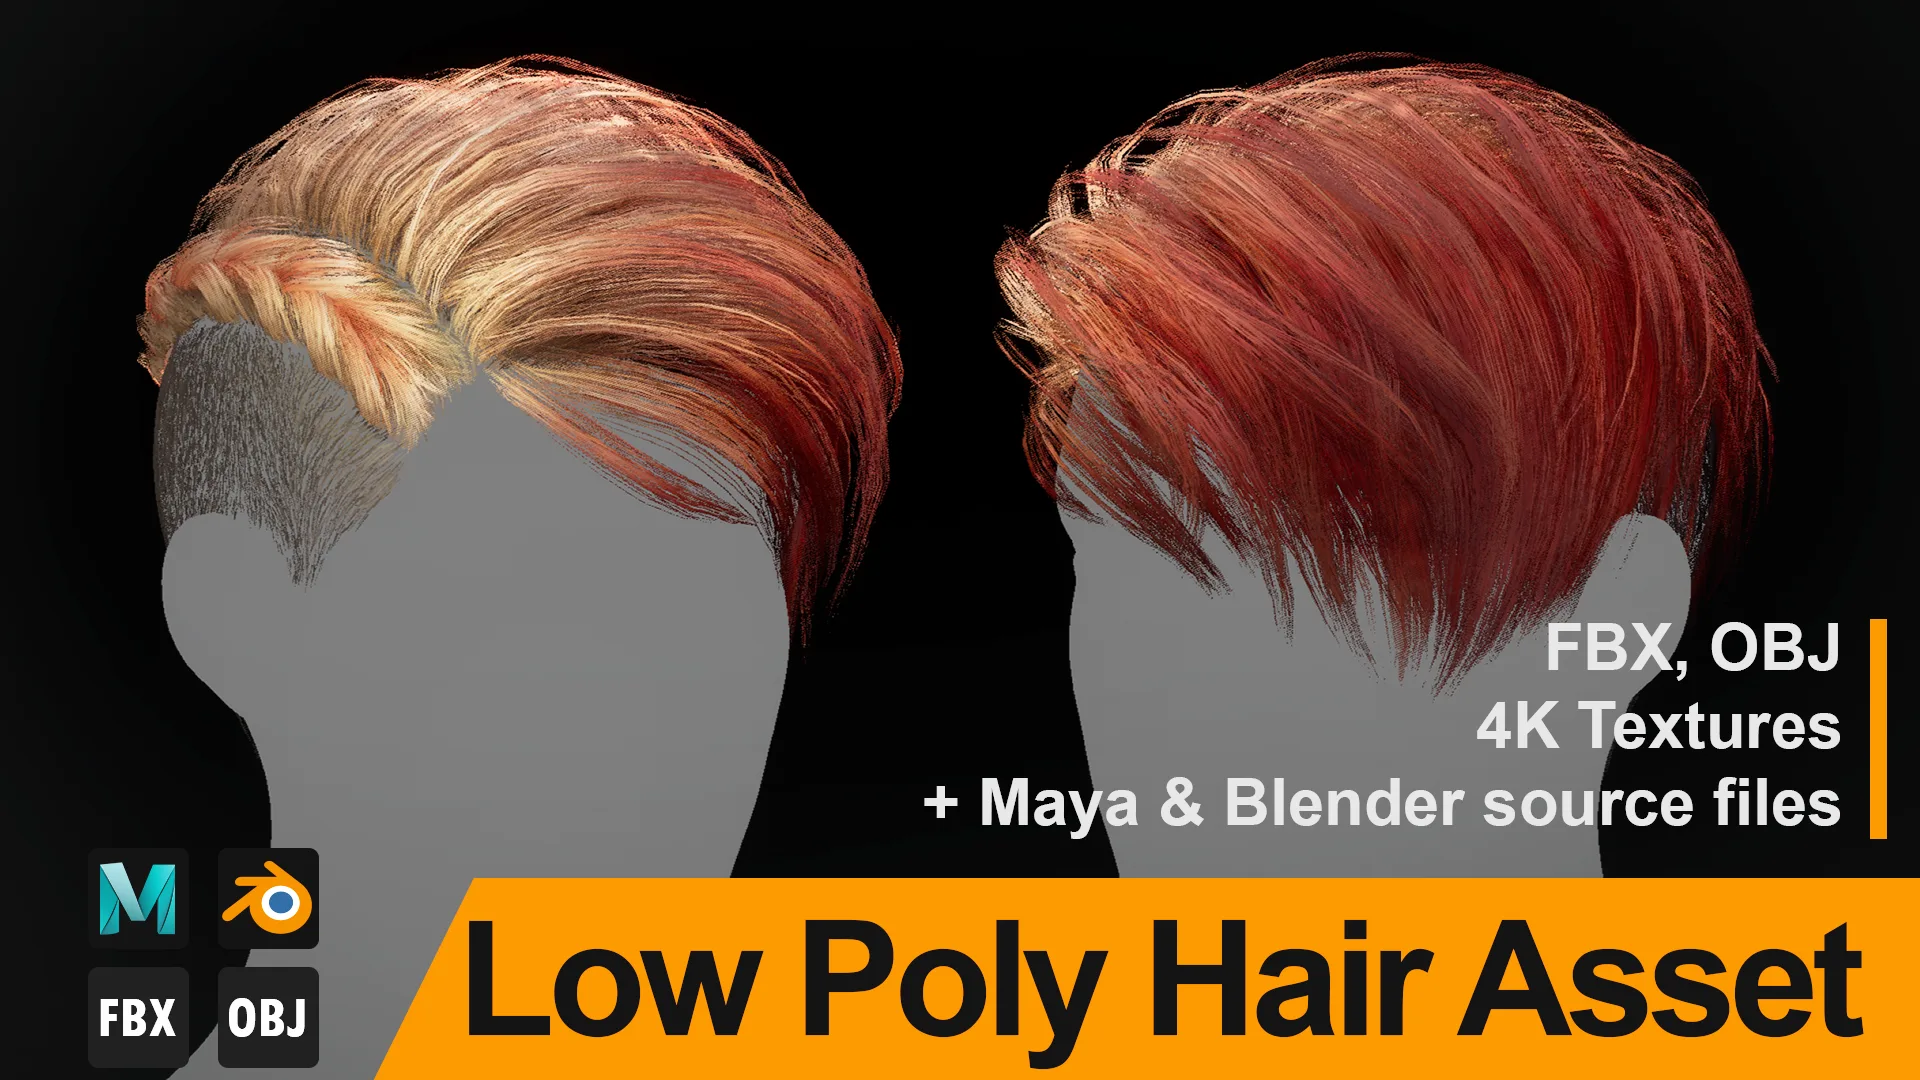 Low Poly Hair "Charlize" - FBX/OBJ + Maya, Blender source file, 4K Textures